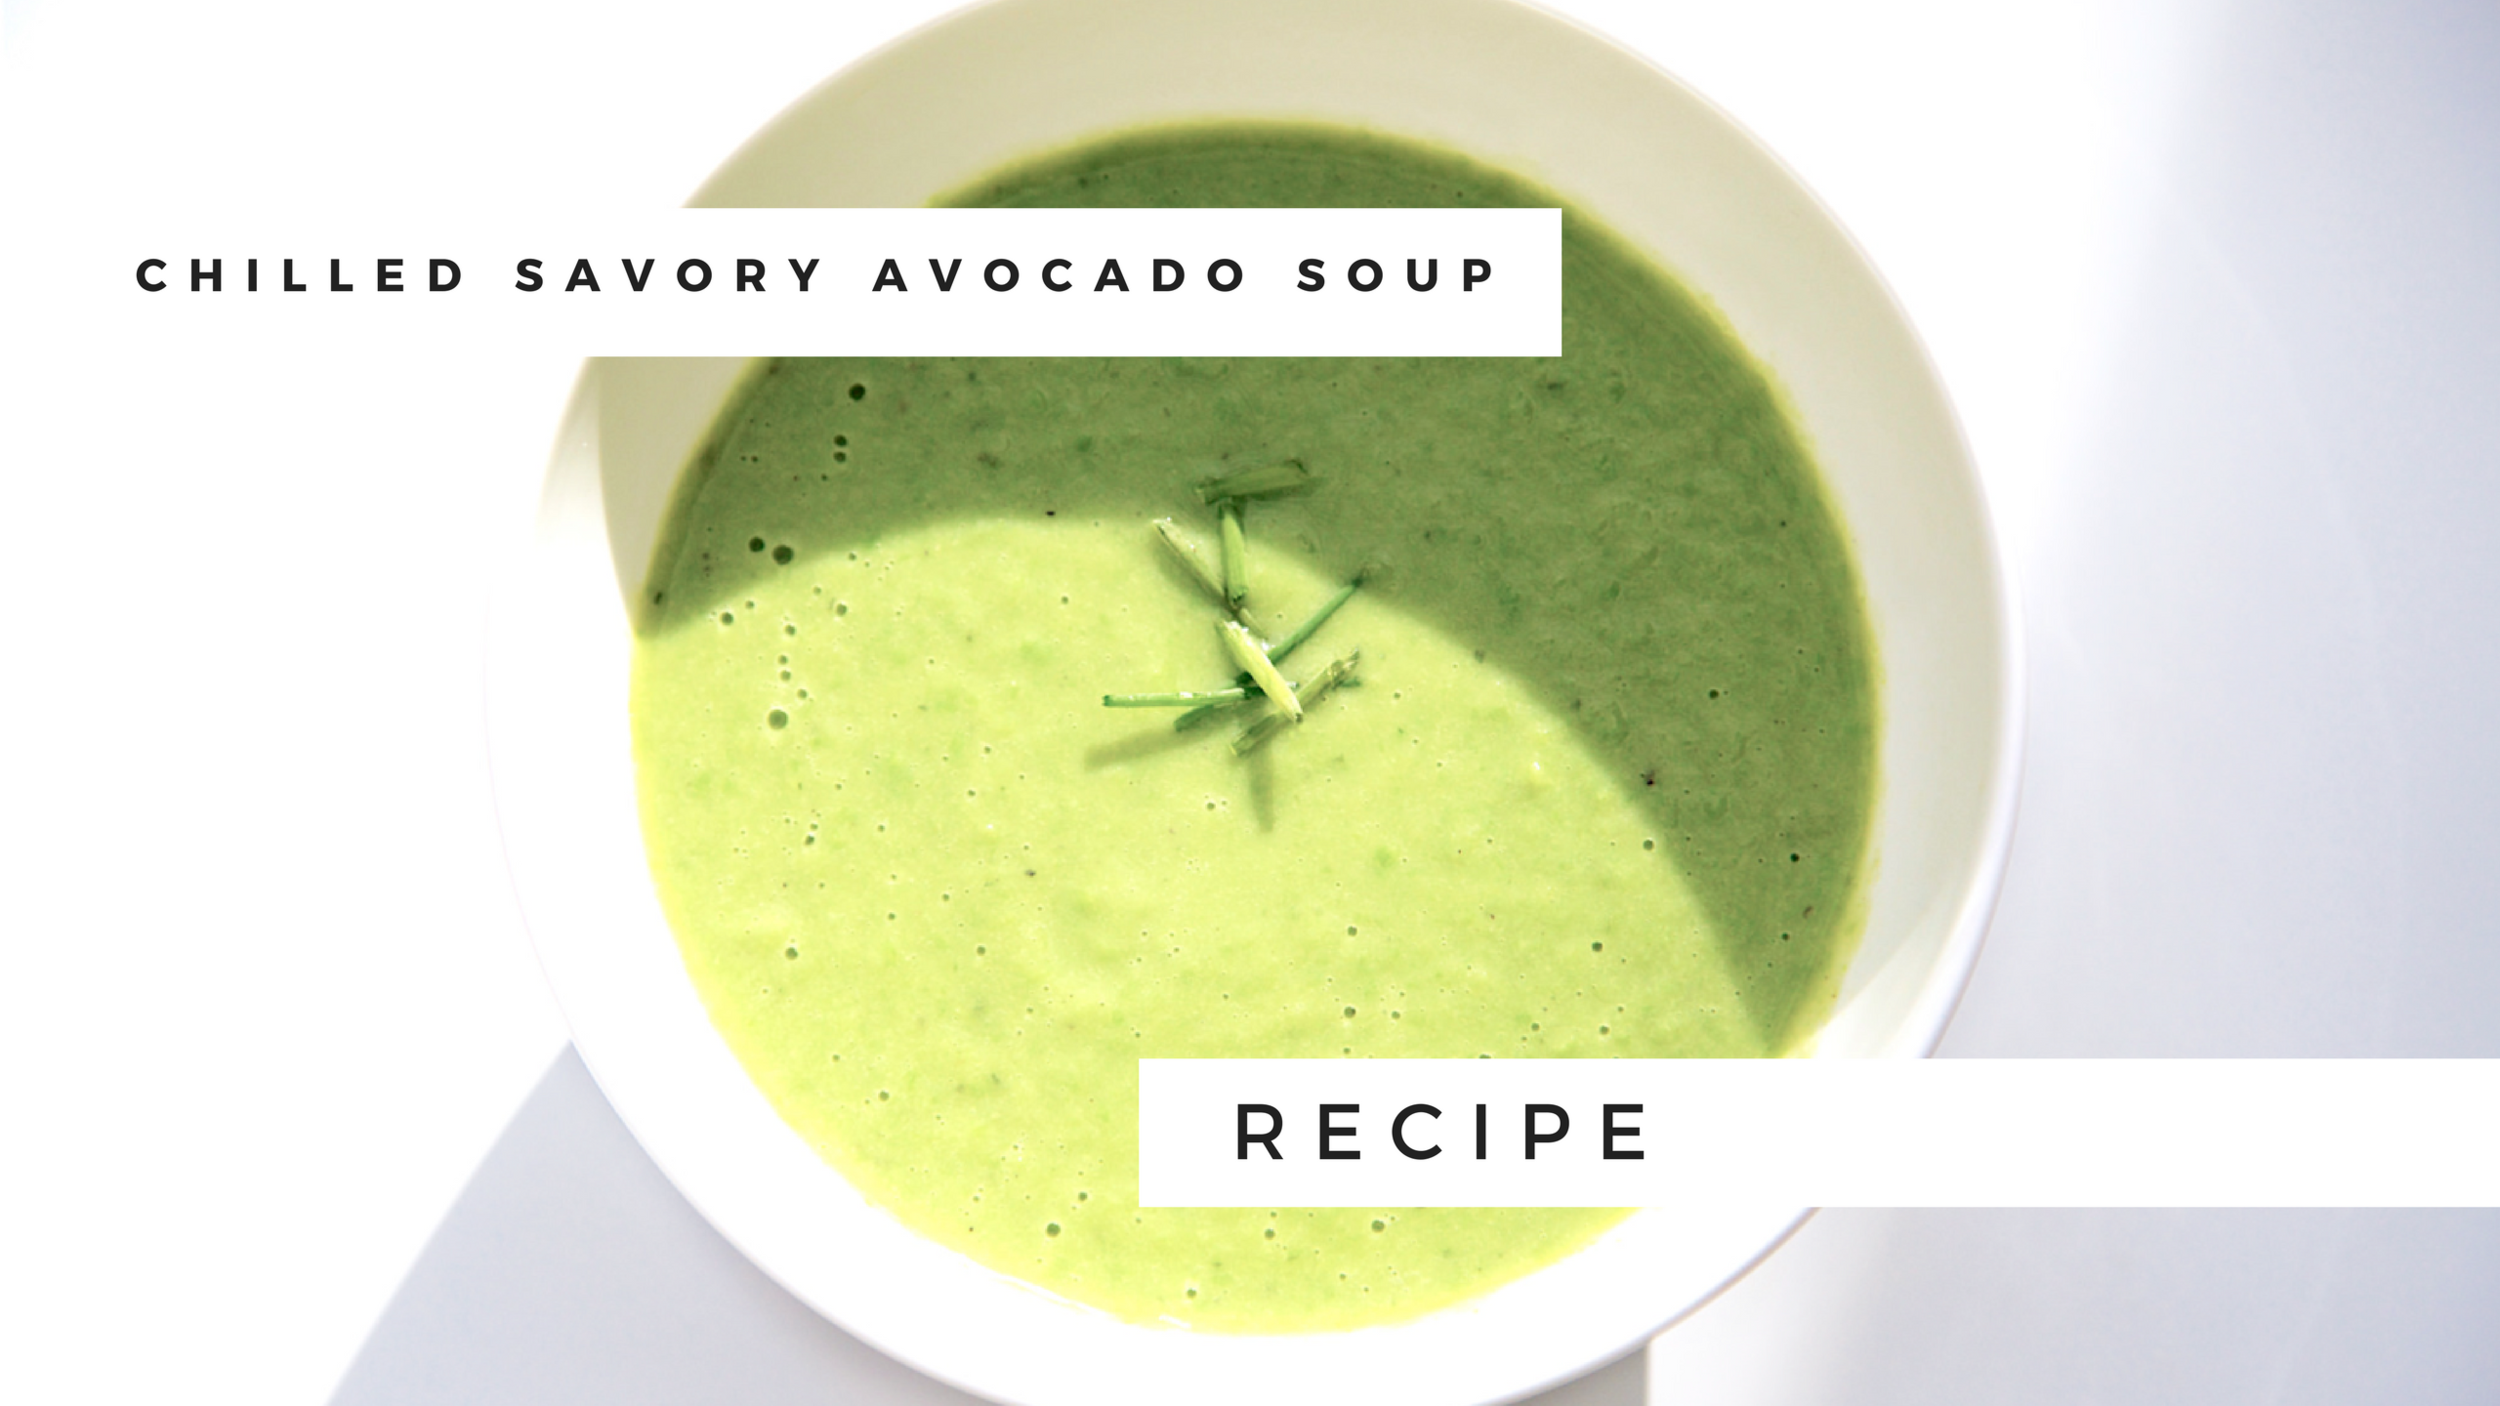 Chilled Savory Avocado Soup image asset